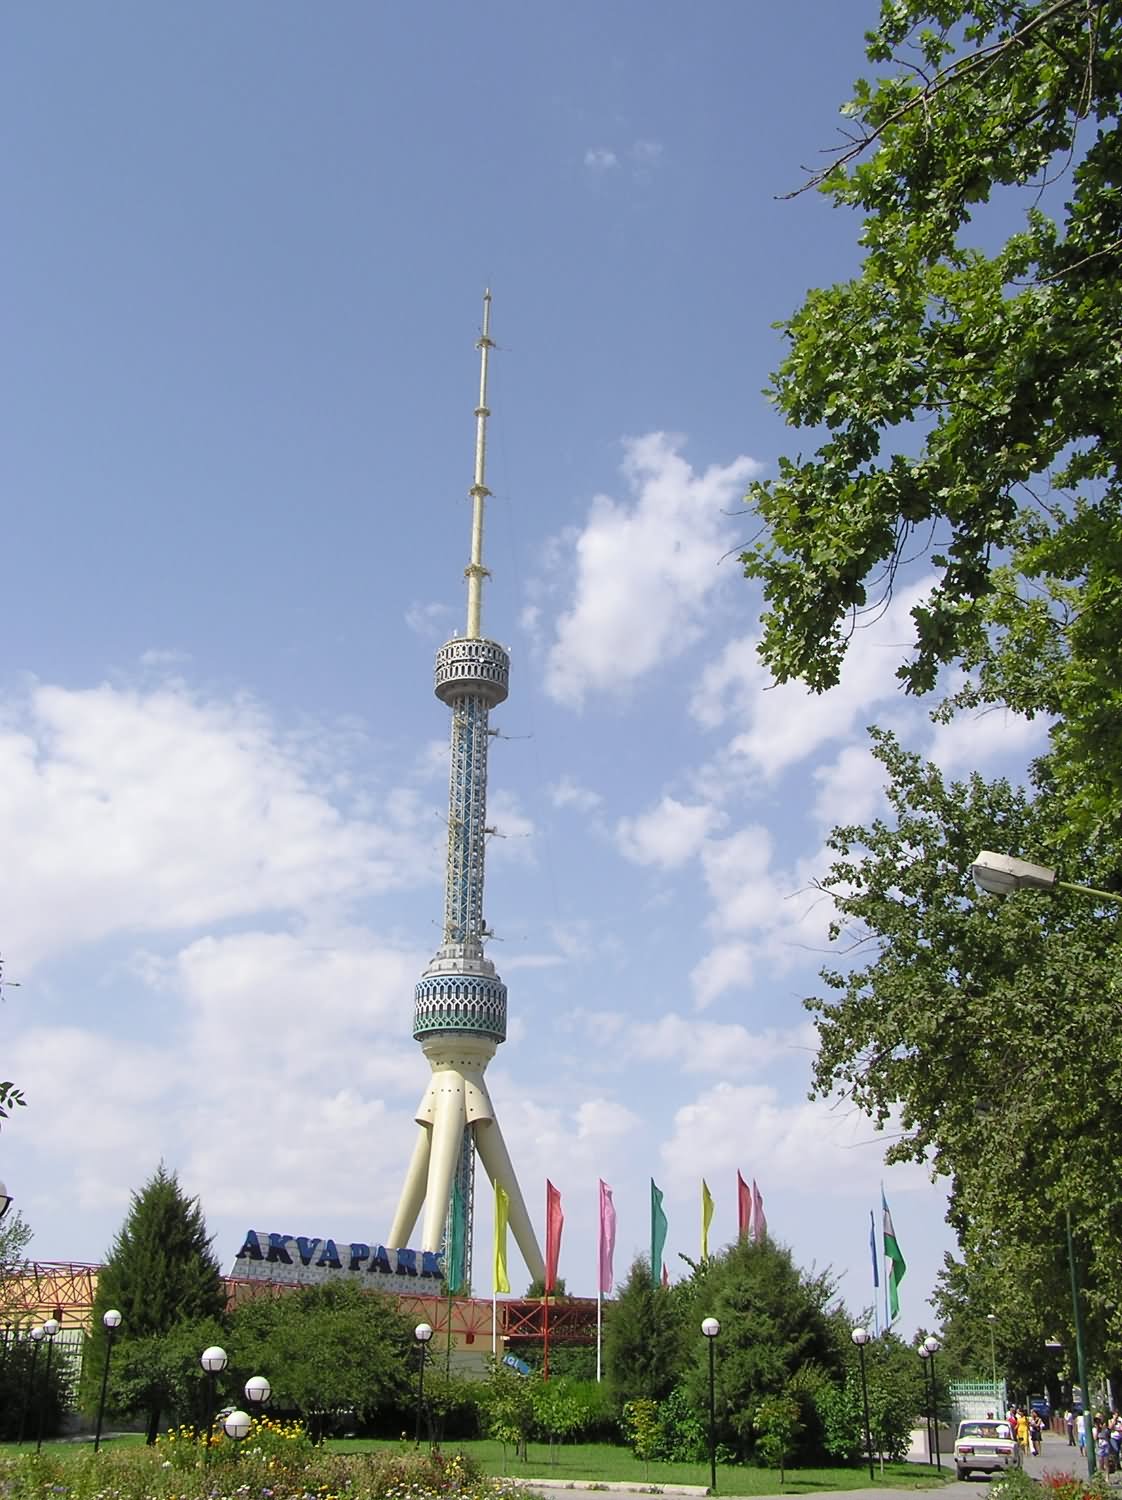 Amazing Picture Of The Tashkent Tower In Uzbekistan